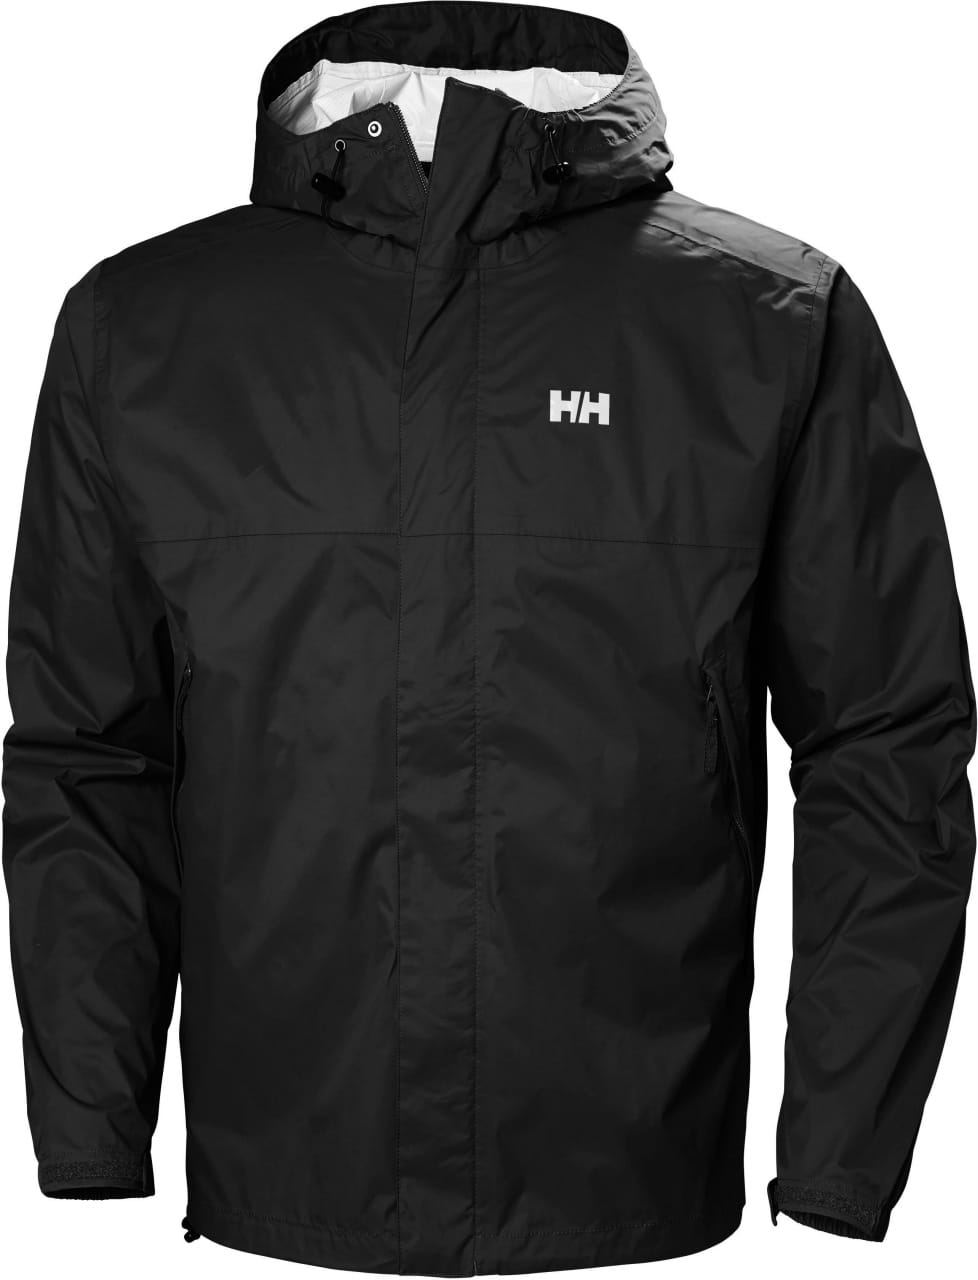 Jachetă pentru bărbați în aer liber Helly Hansen Loke Jacket